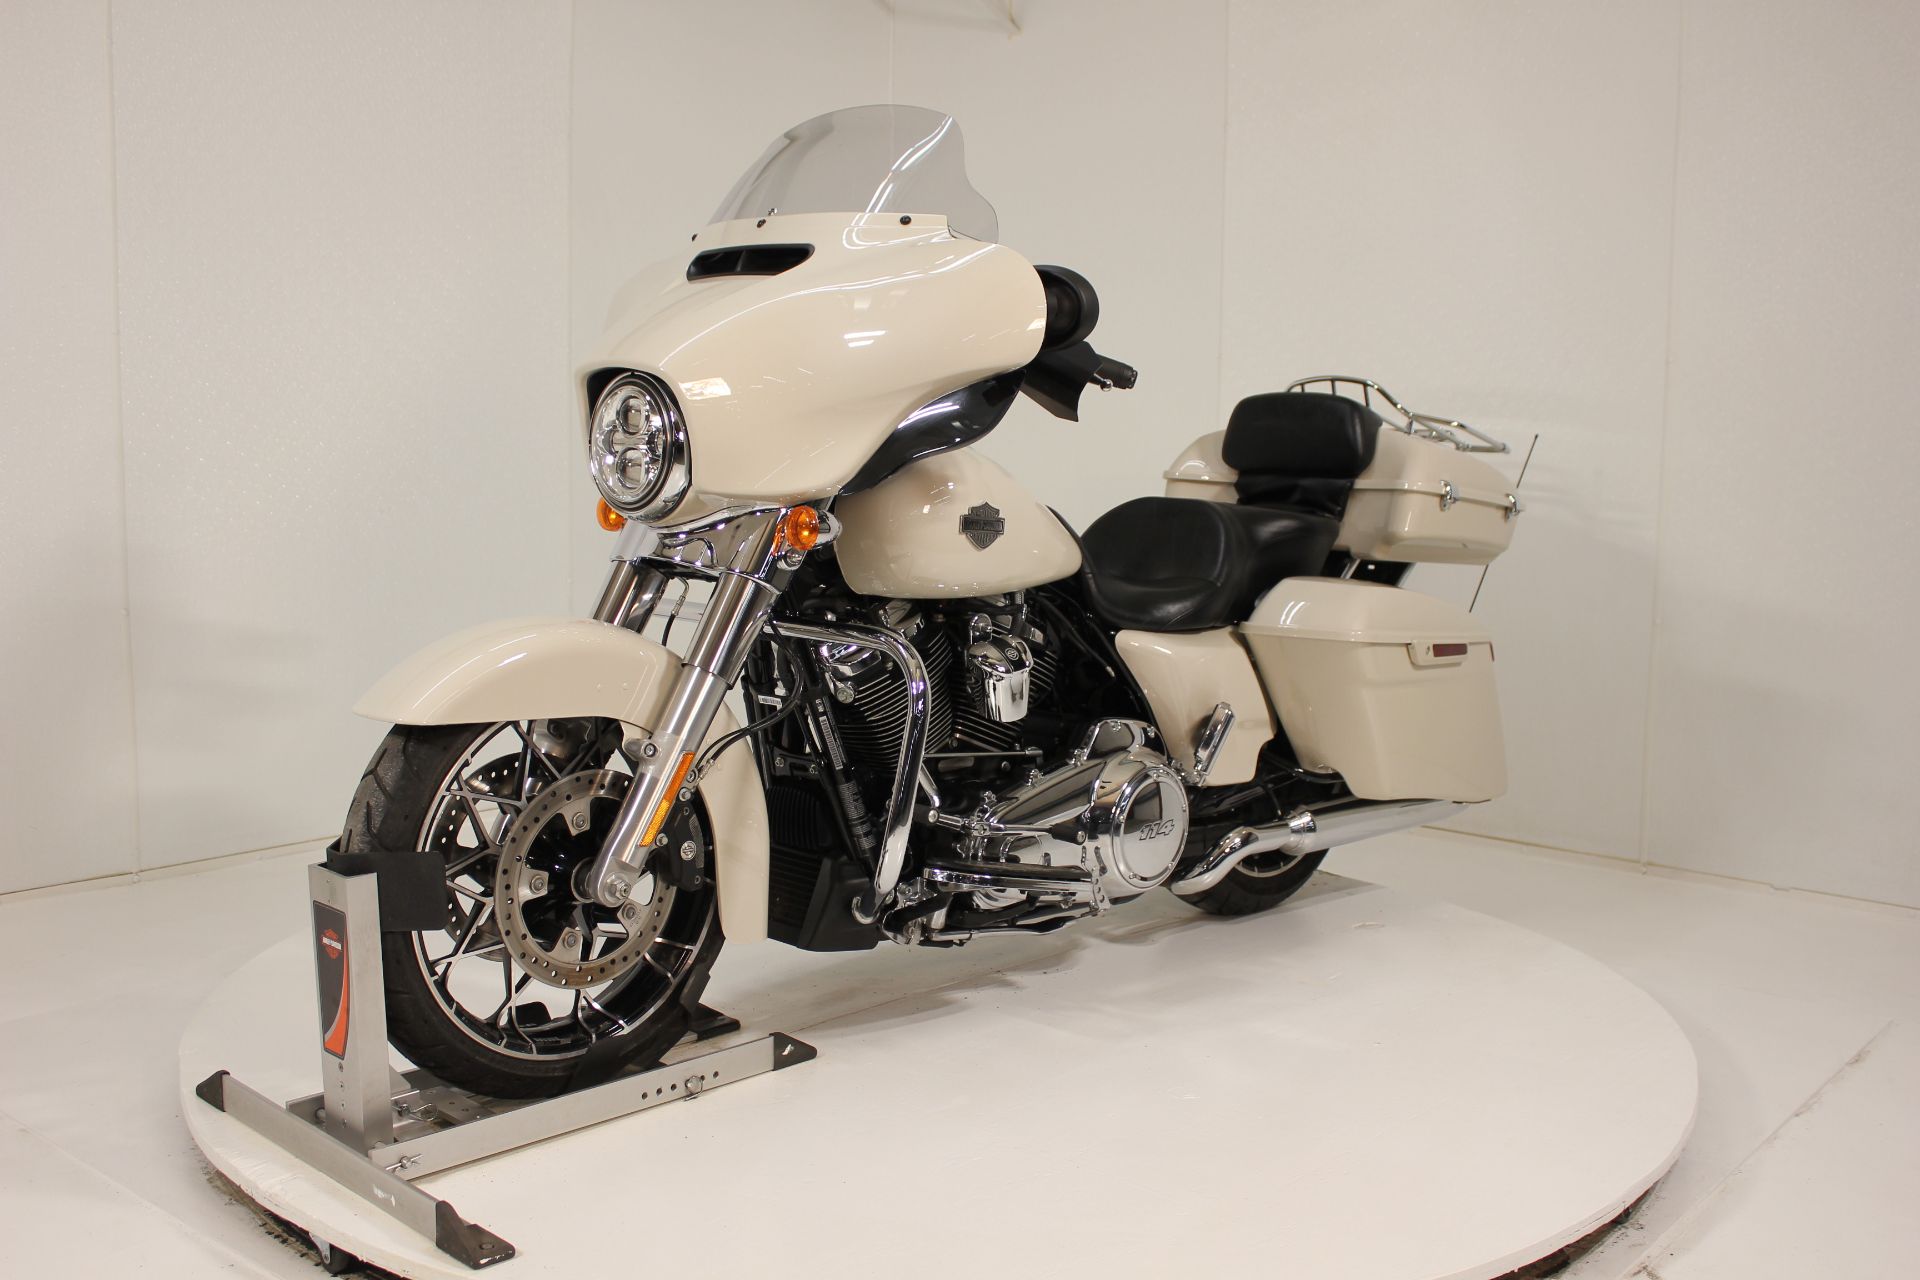 2022 Harley-Davidson Street Glide® Special in Pittsfield, Massachusetts - Photo 8